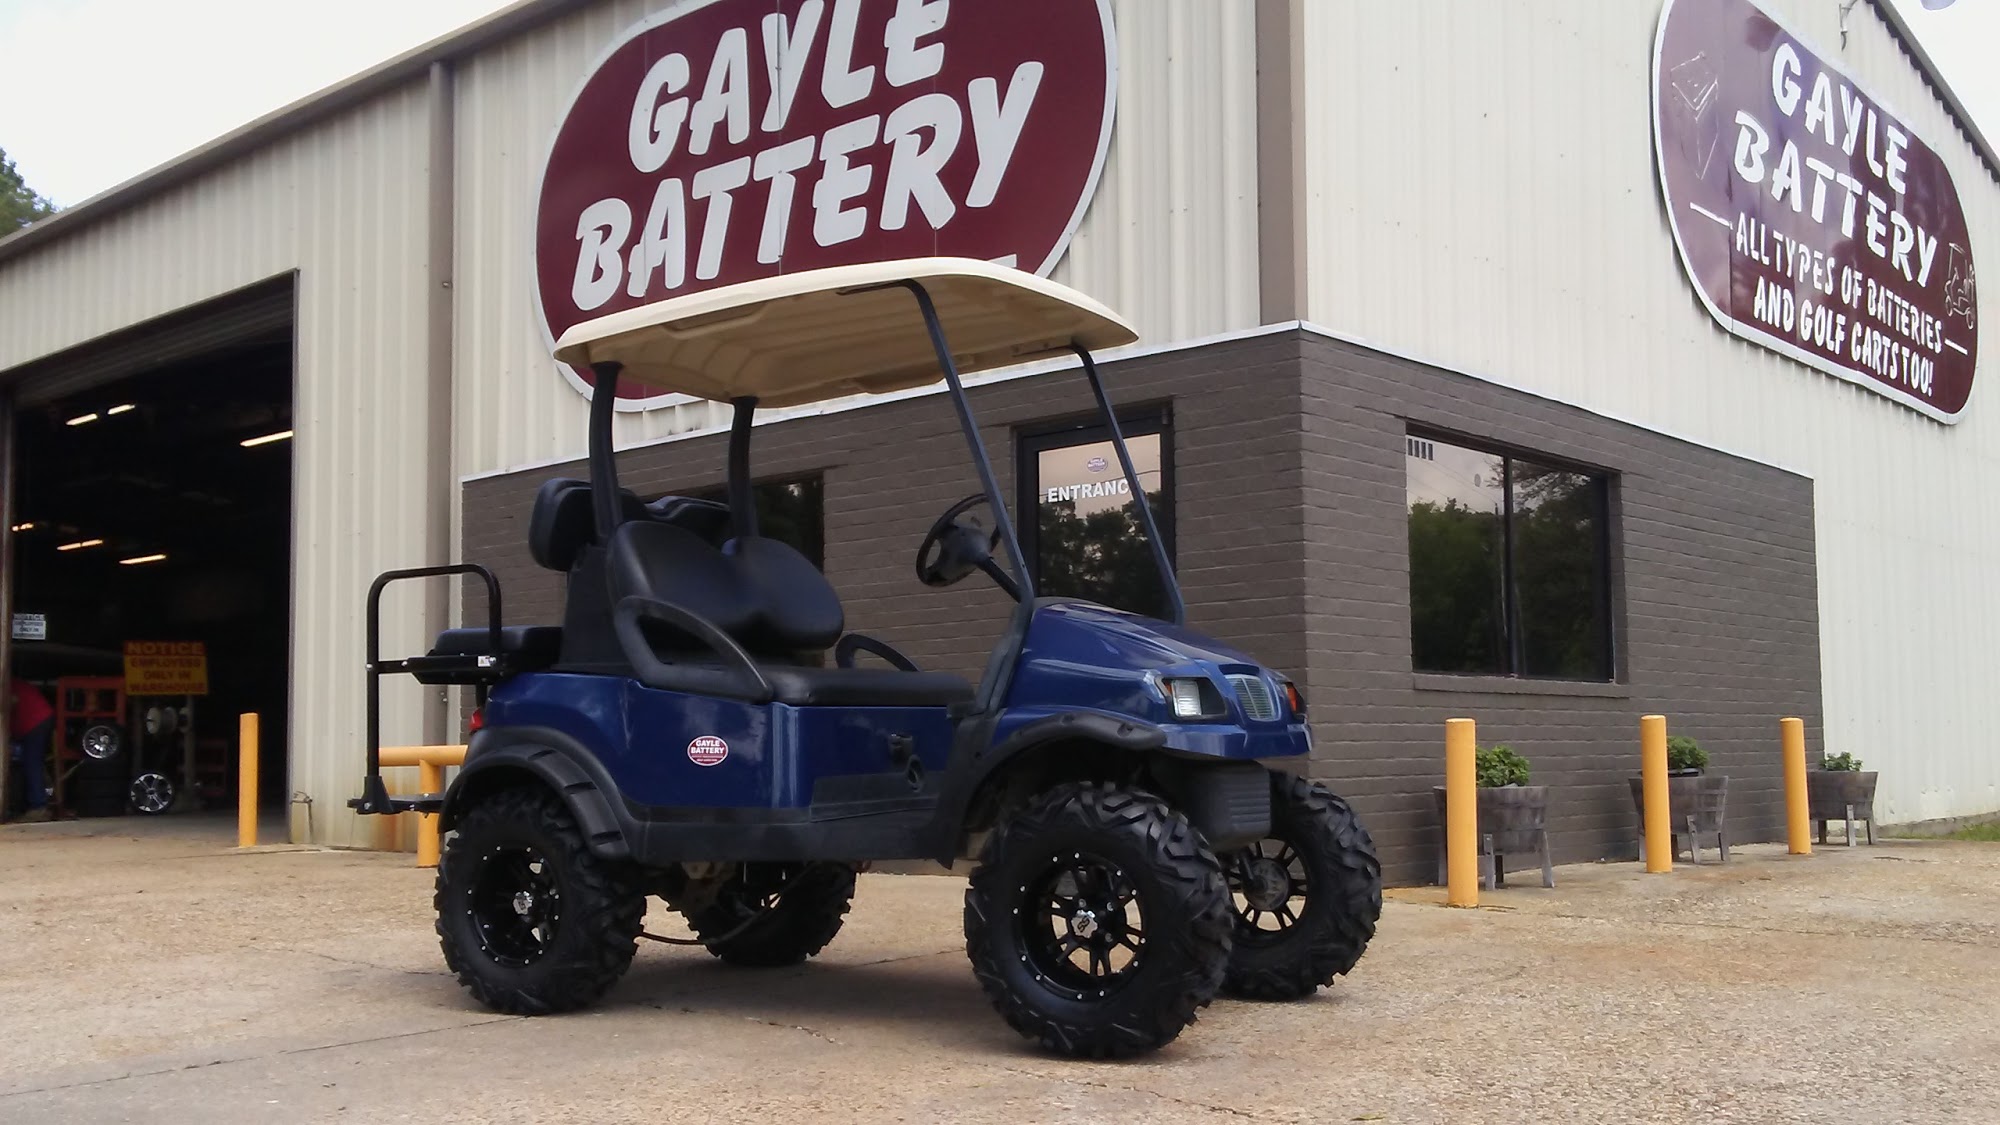 Gayle Battery & Golf Carts